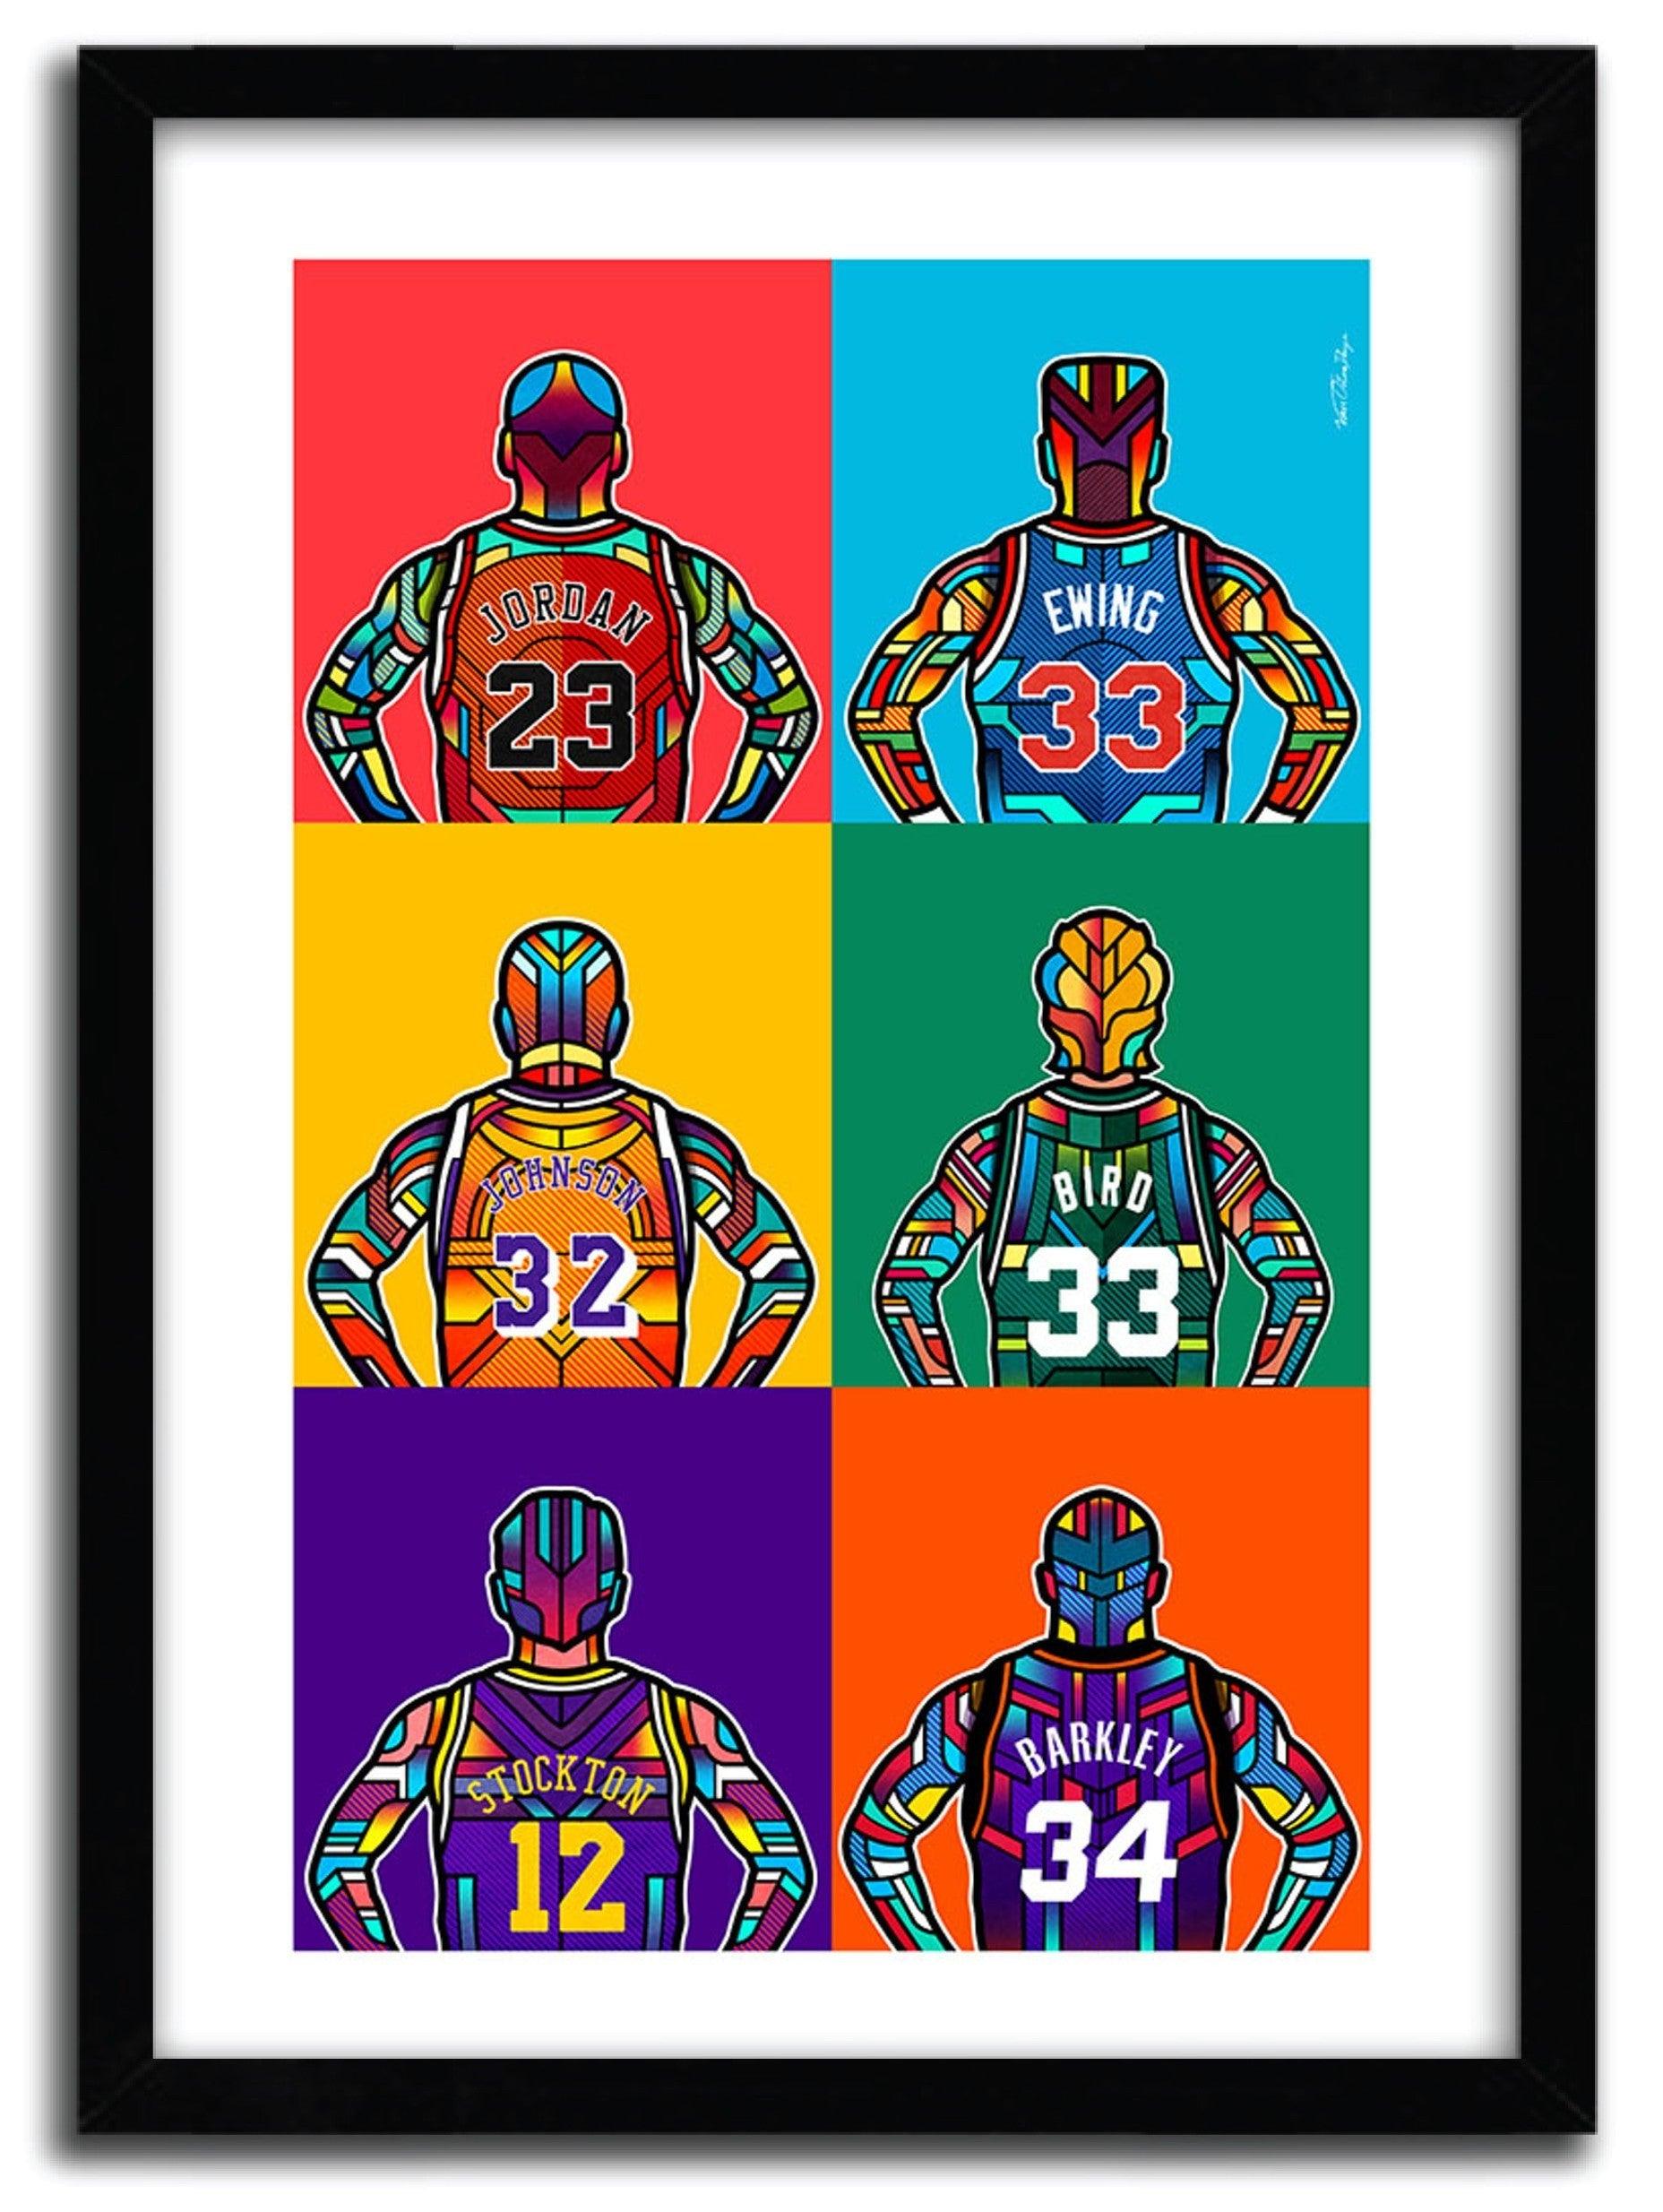 NBA LEGENDS by VAN ORTON ArtAndToys